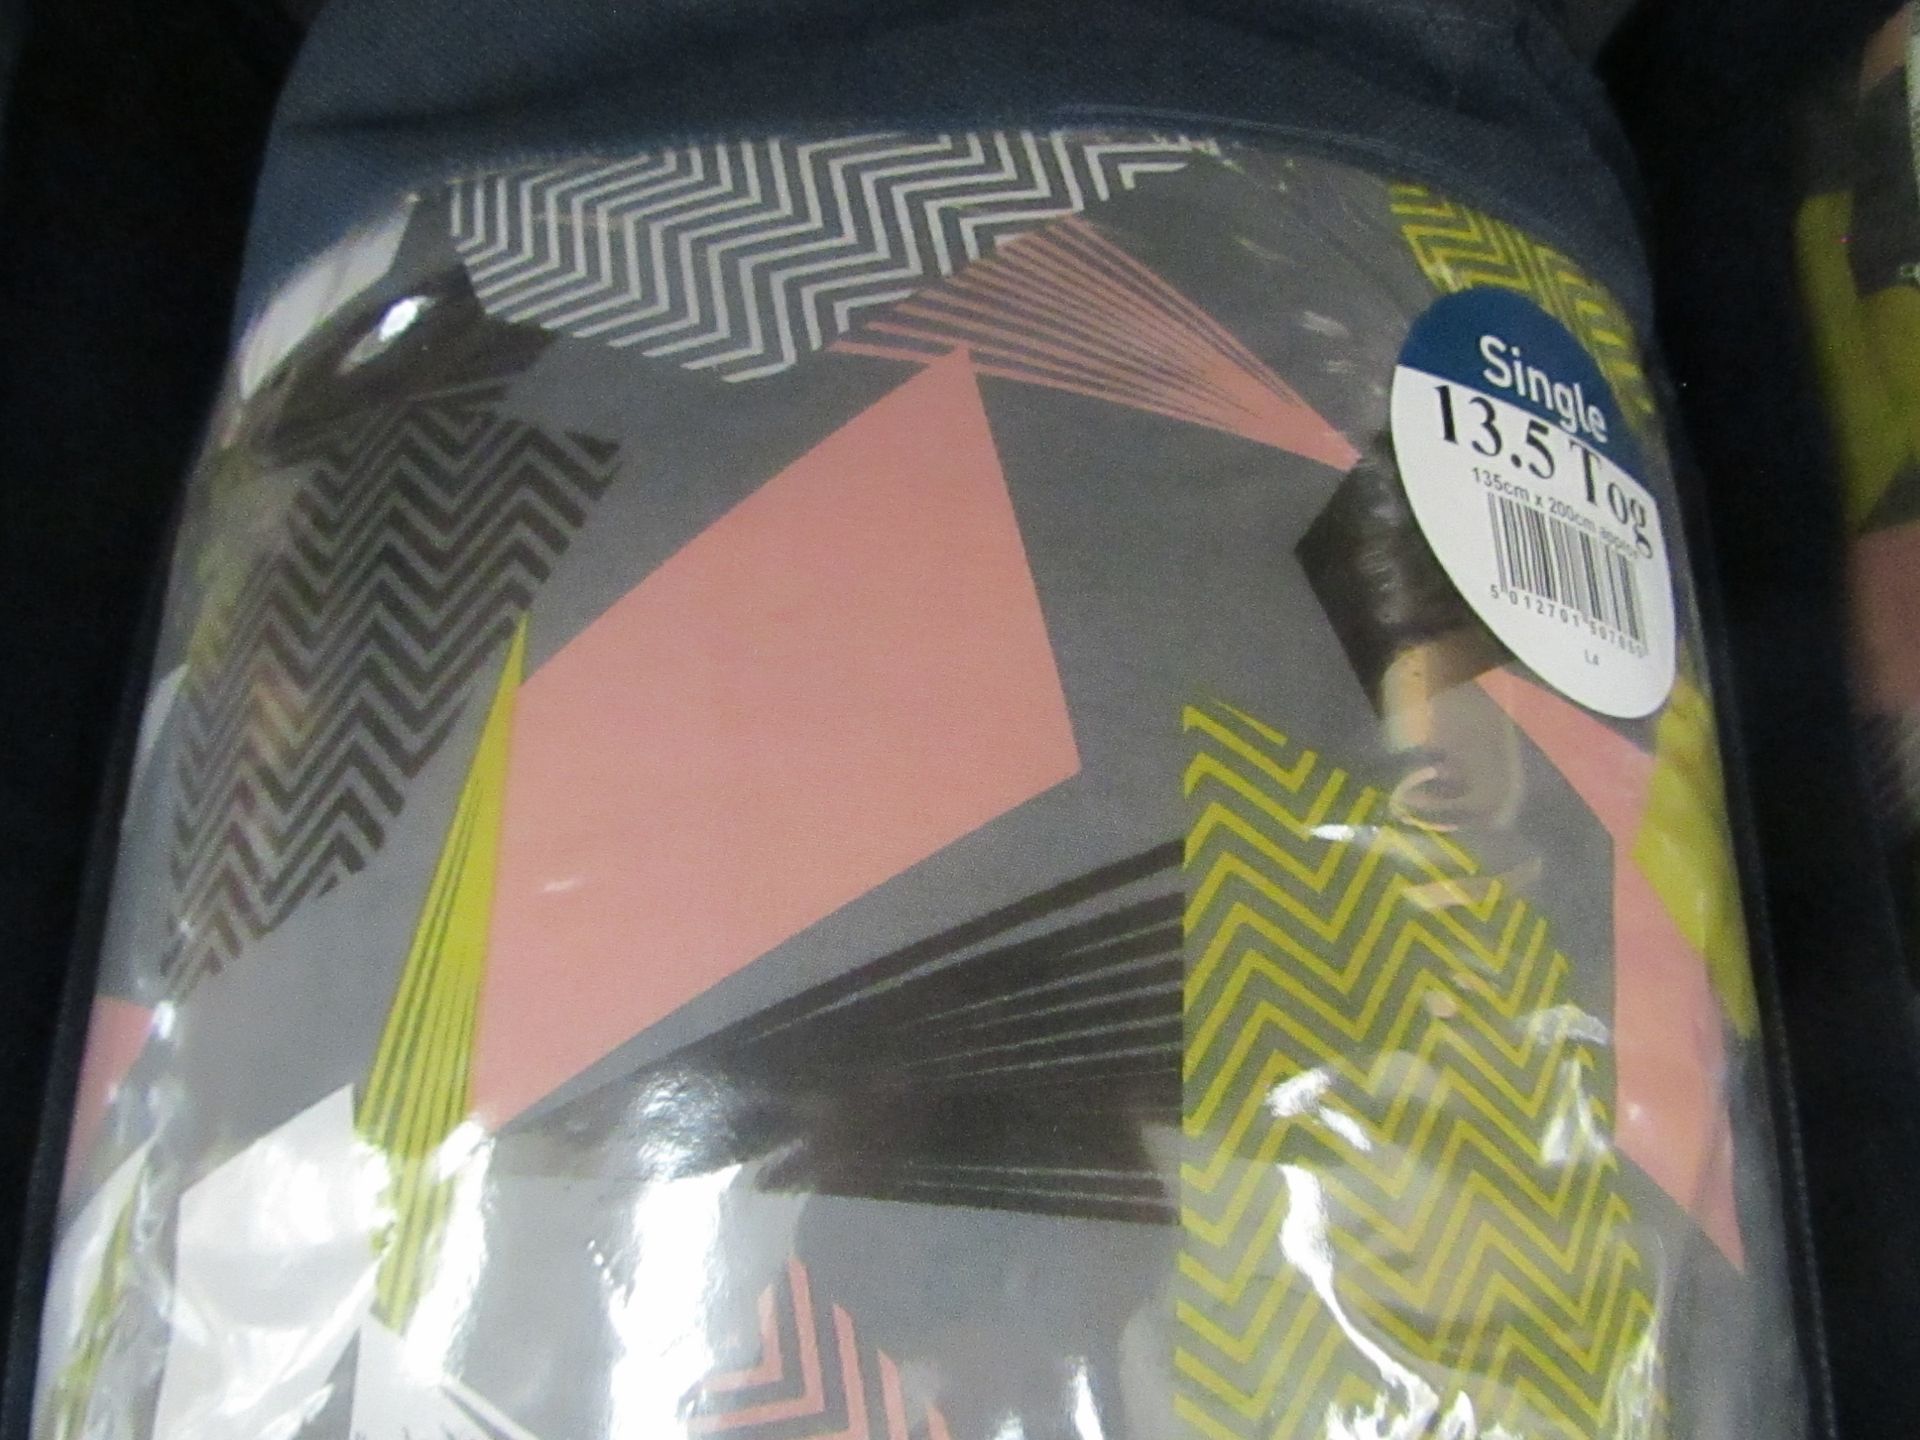 Comfy Quilts - 13.5 Tog Single Patterned Duvet - New & Packaged.